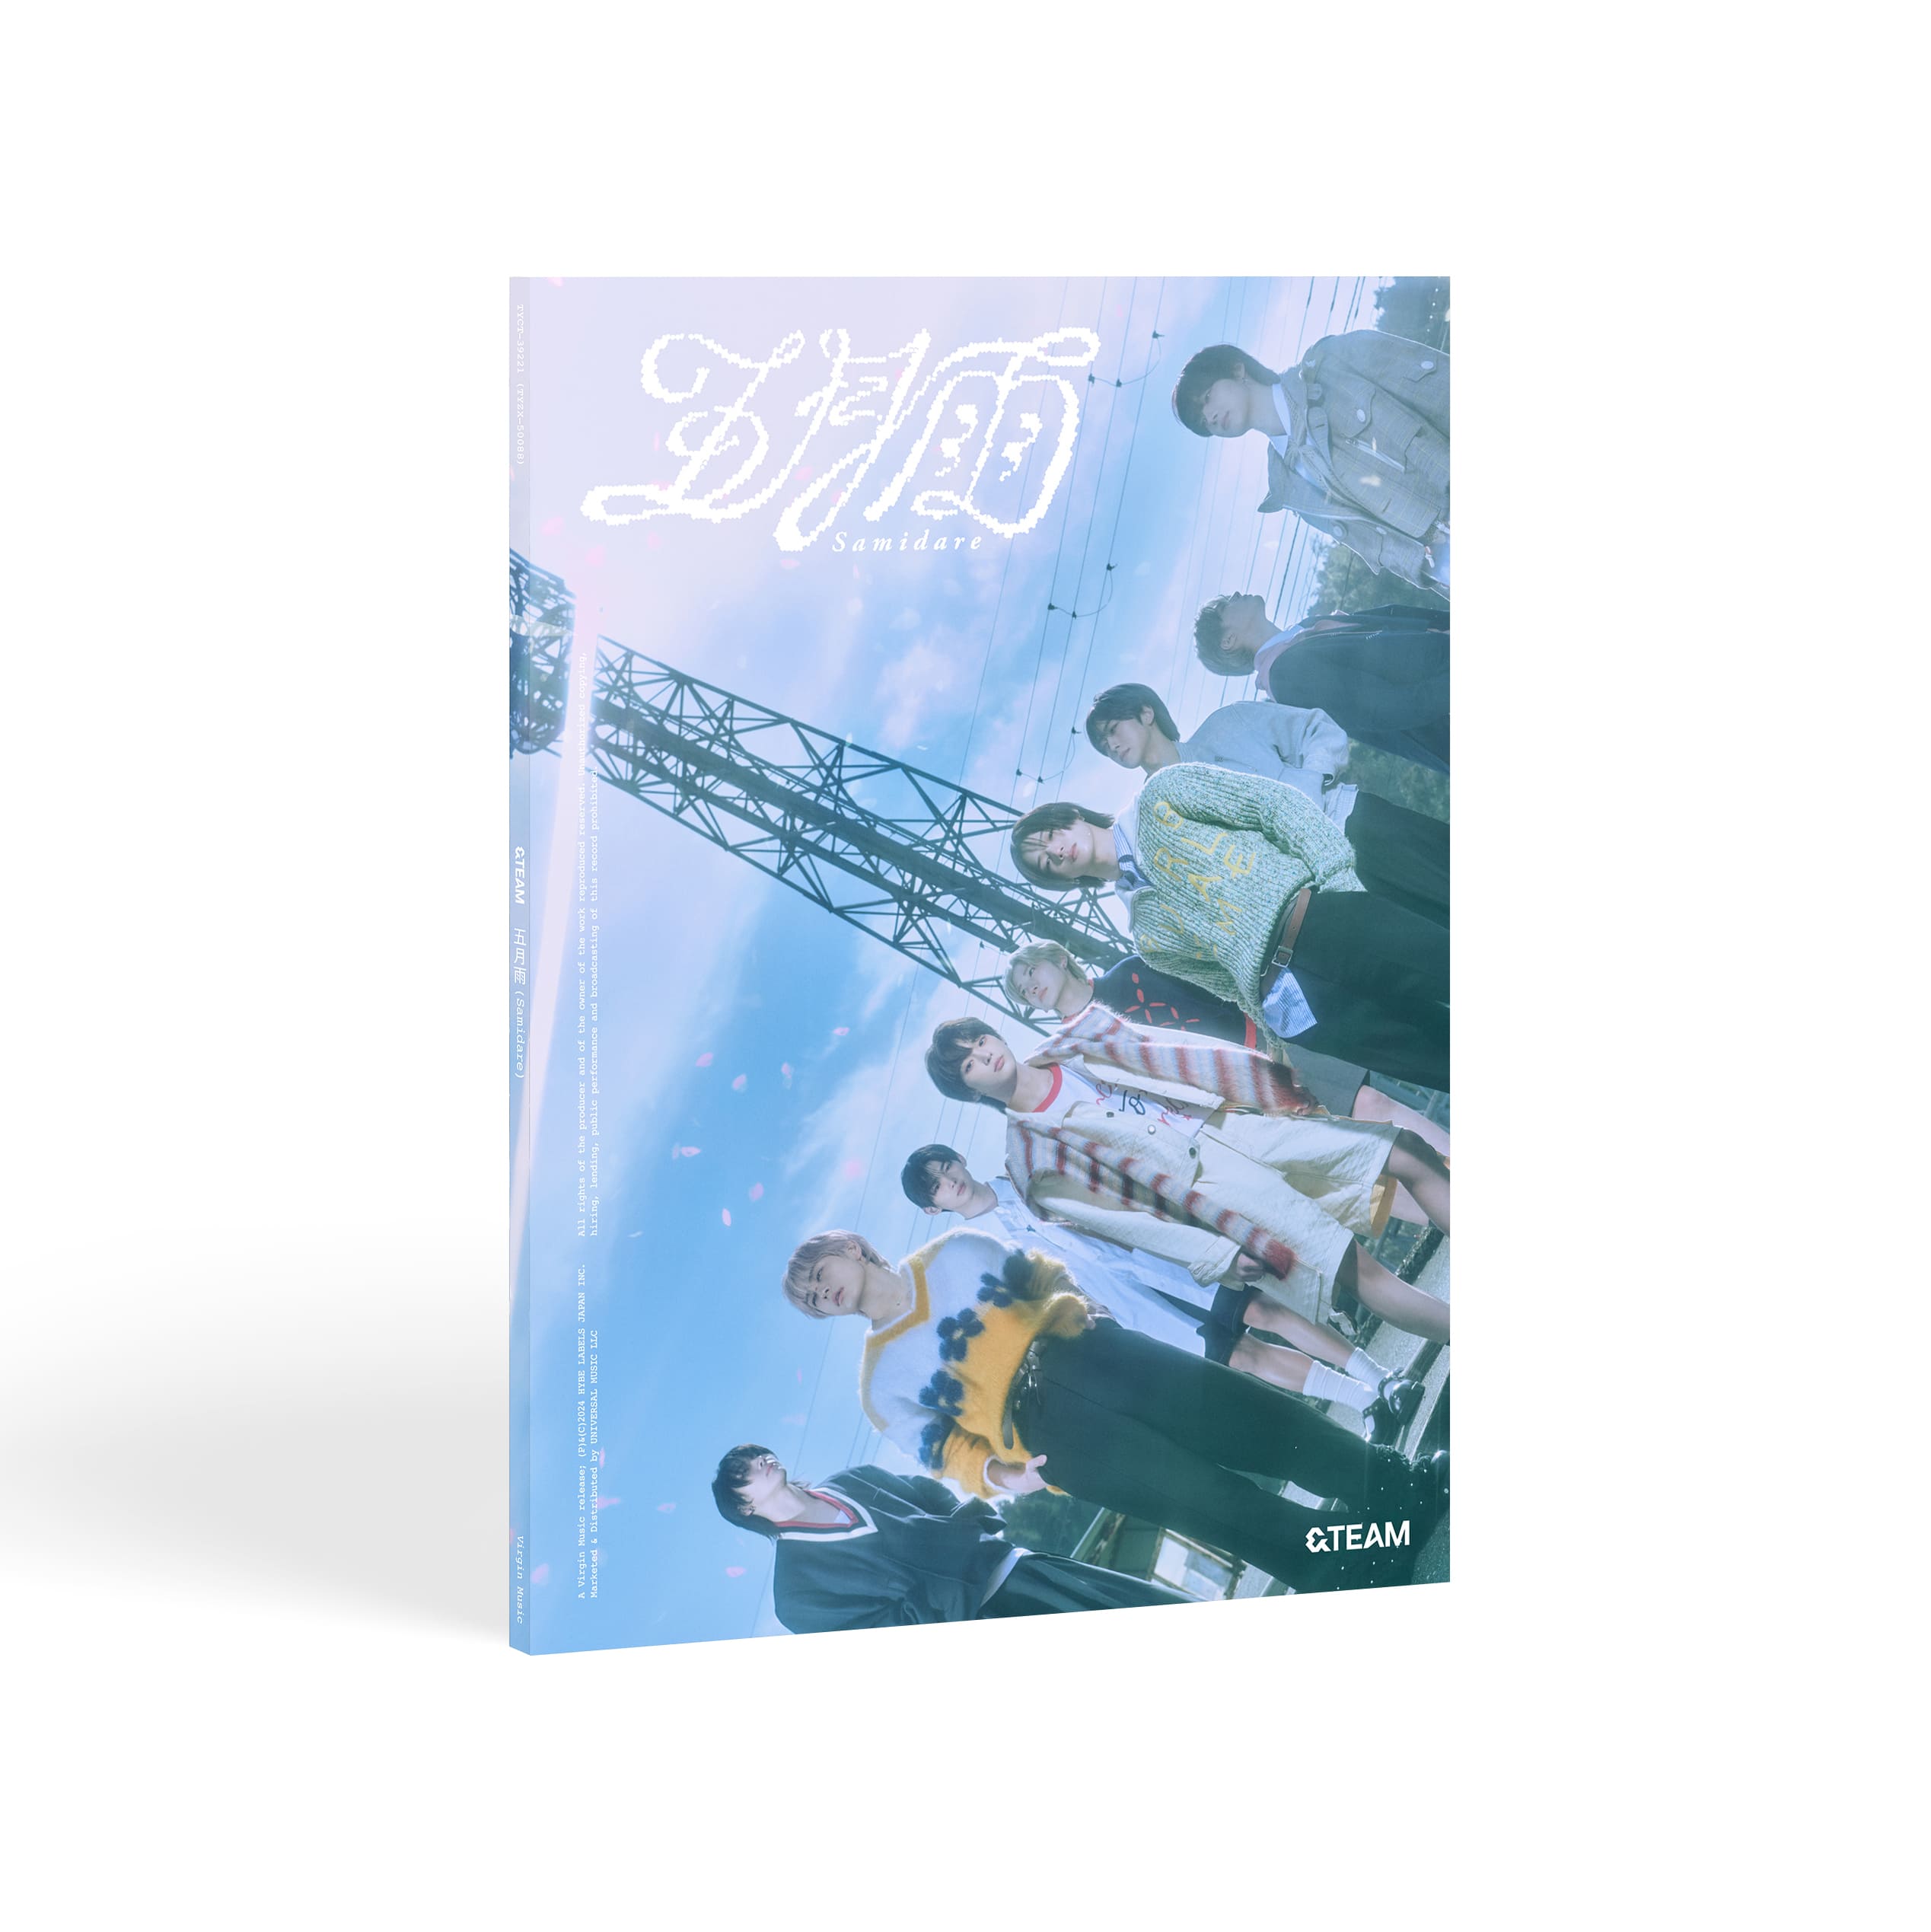 &TEAM 1st Single Album Samidare (Limited Edition) + POB Postcard